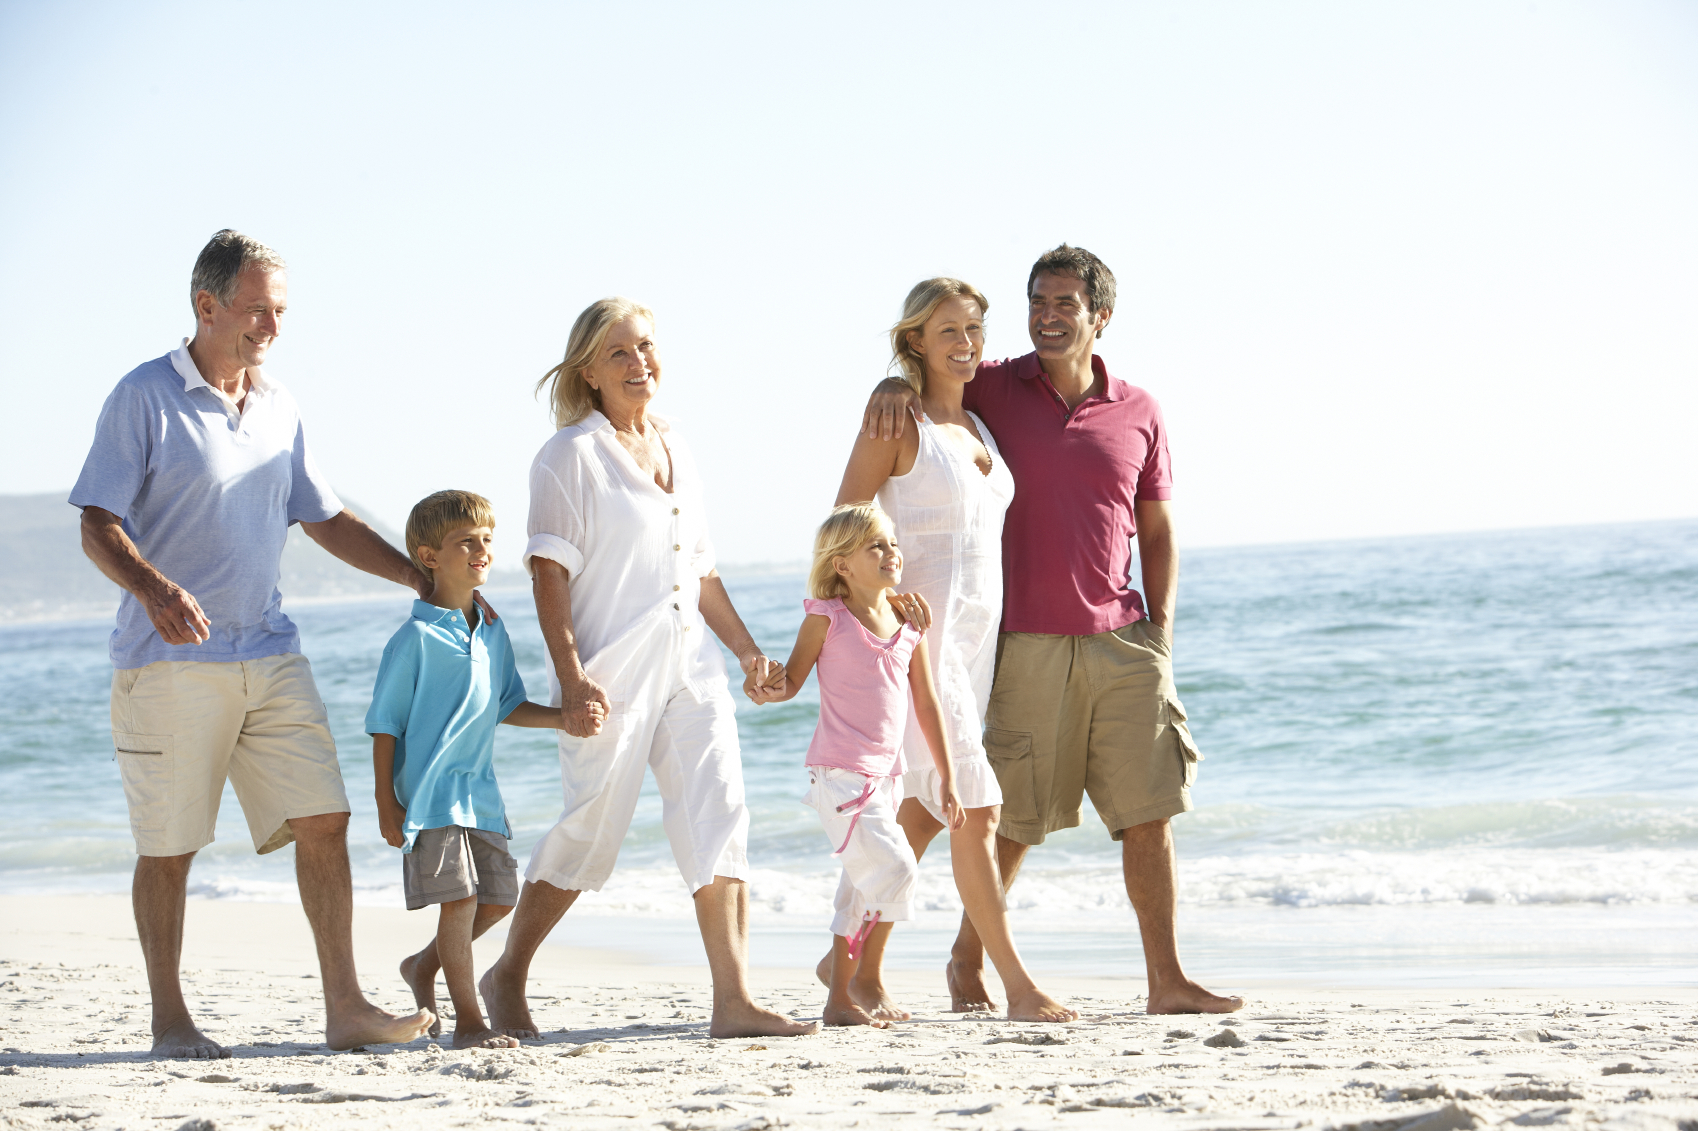 Three Generation Family On Holiday Walking On Beach